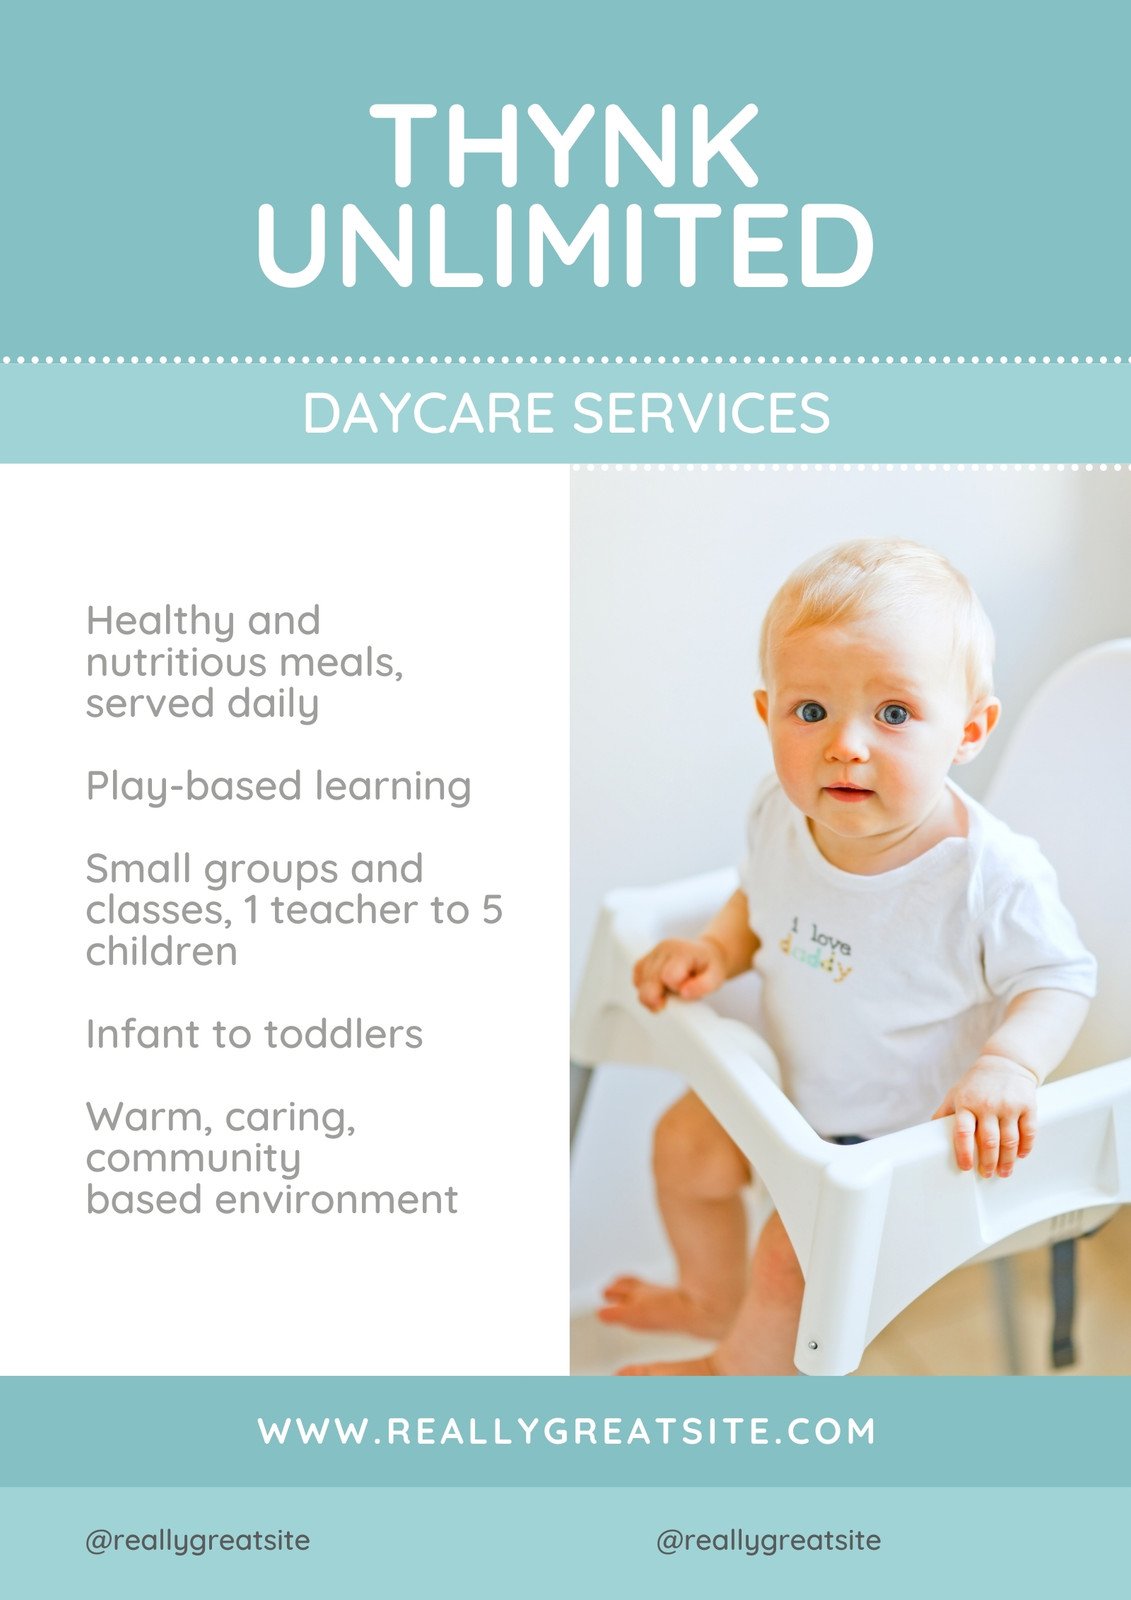 Free custom printable daycare flyer templates  Canva With Regard To Daycare Flyers Templates Free